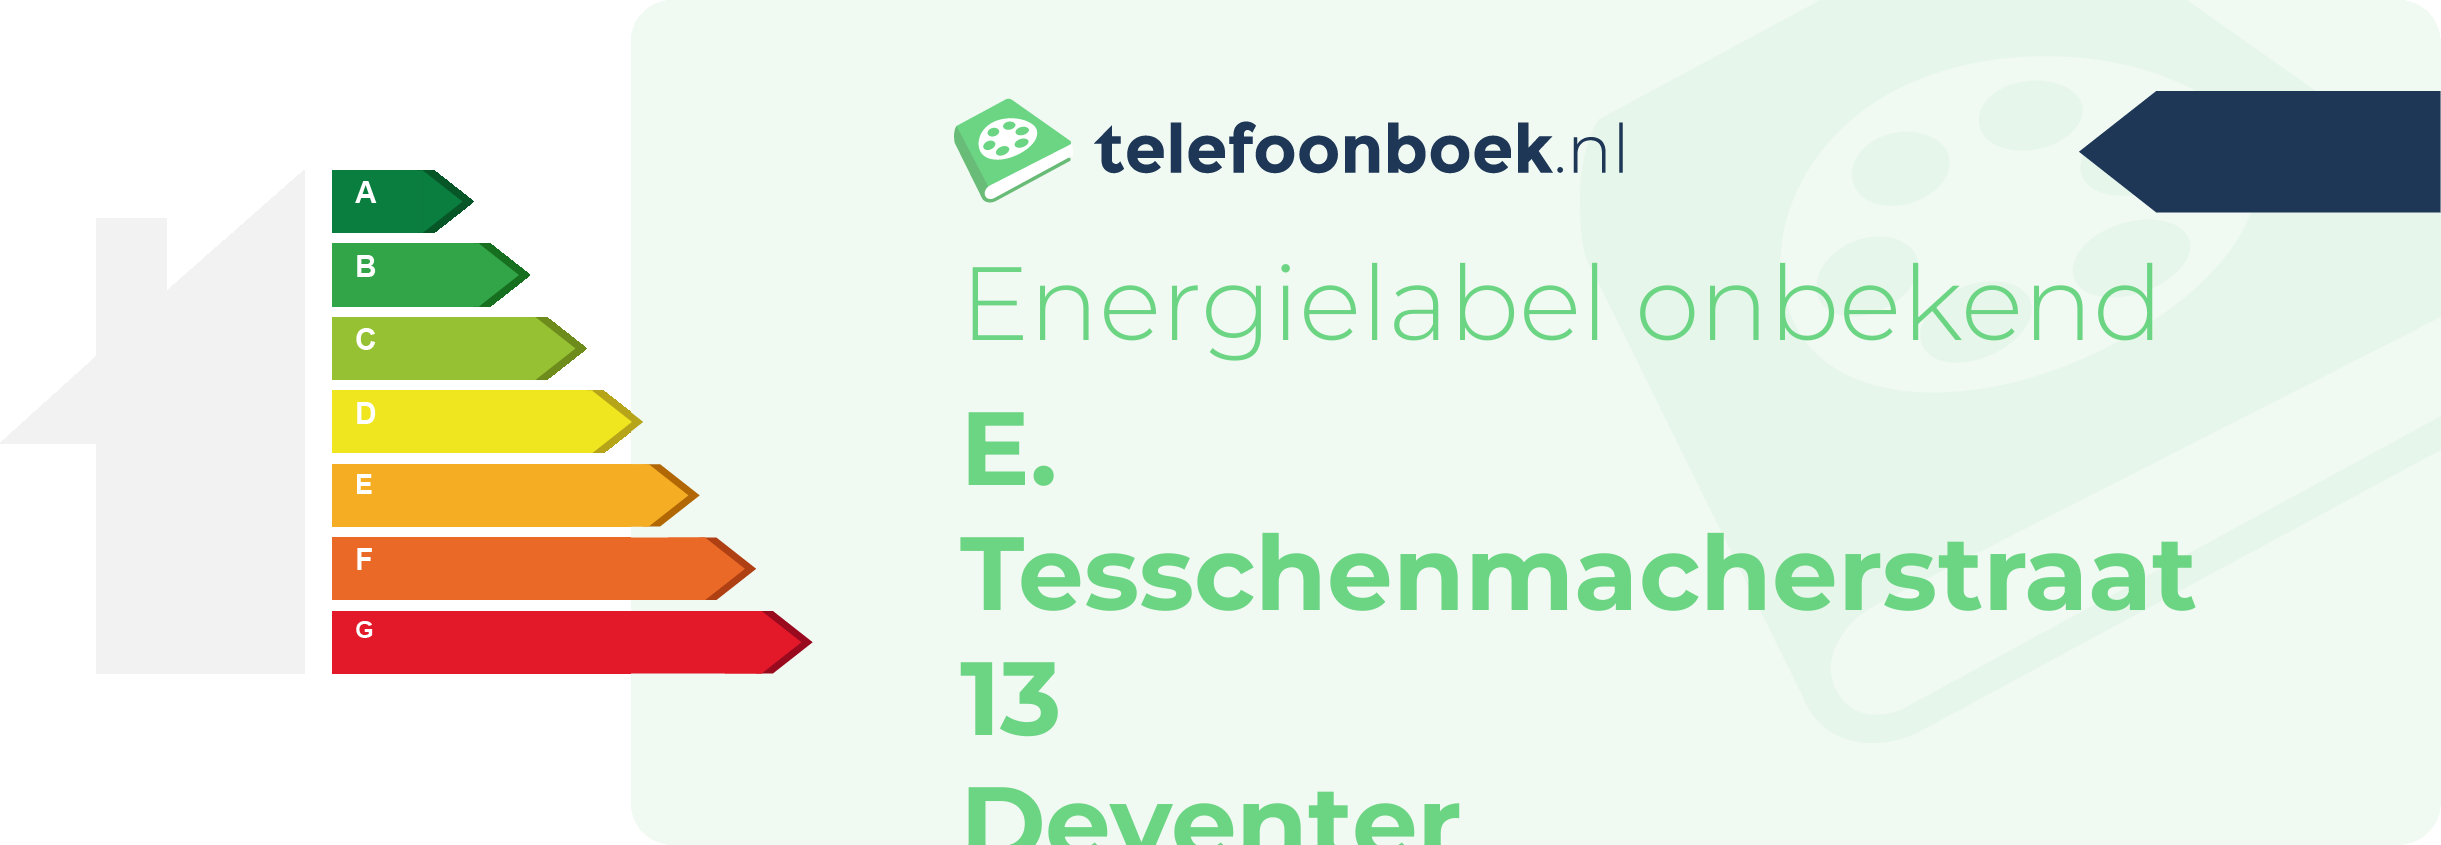 Energielabel E. Tesschenmacherstraat 13 Deventer